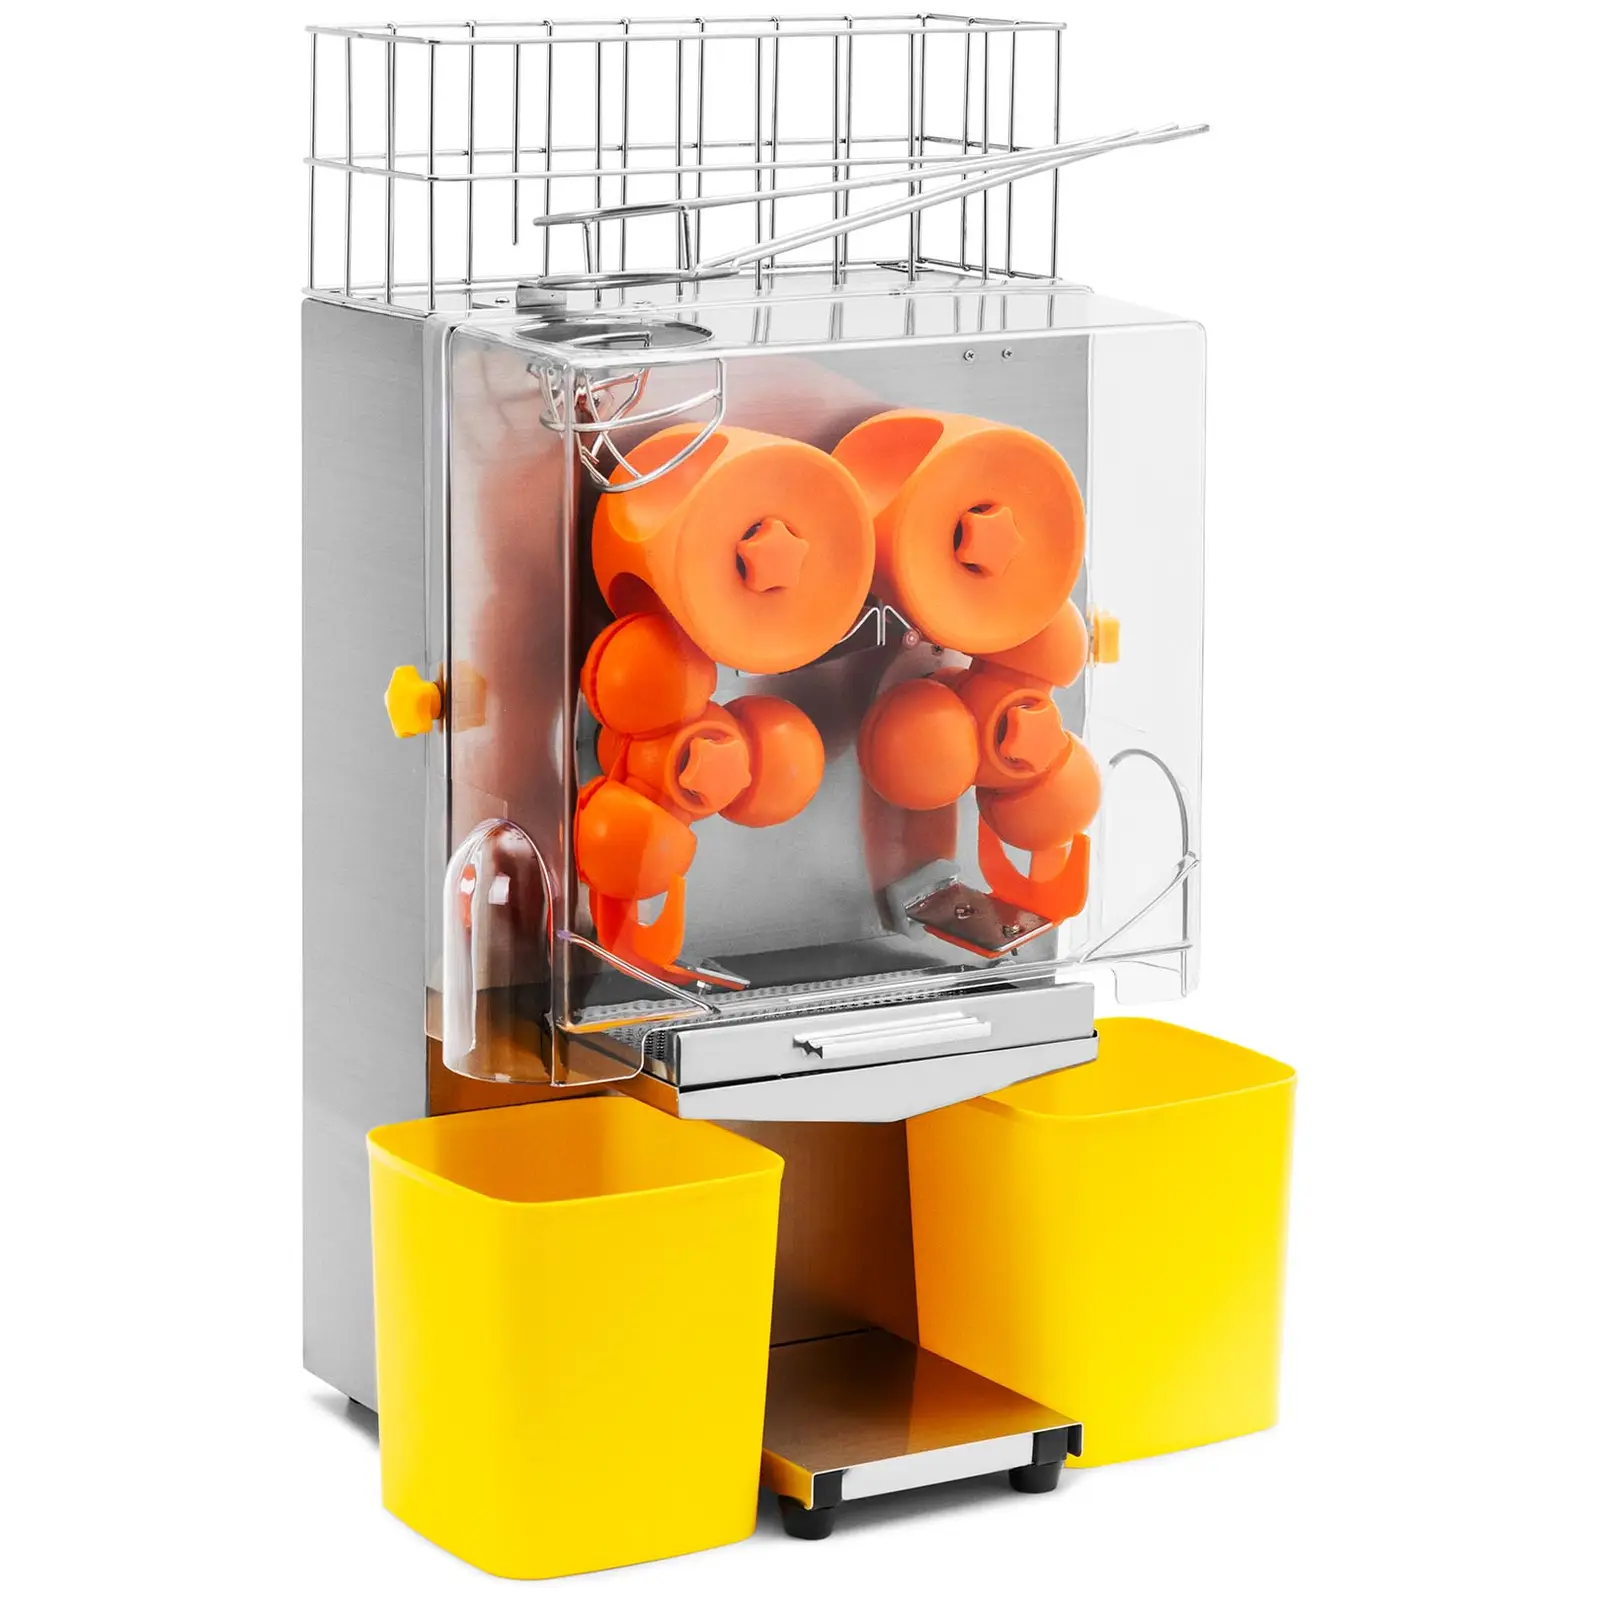 Apelsinų presas elektrinis - 120 W - Royal Catering